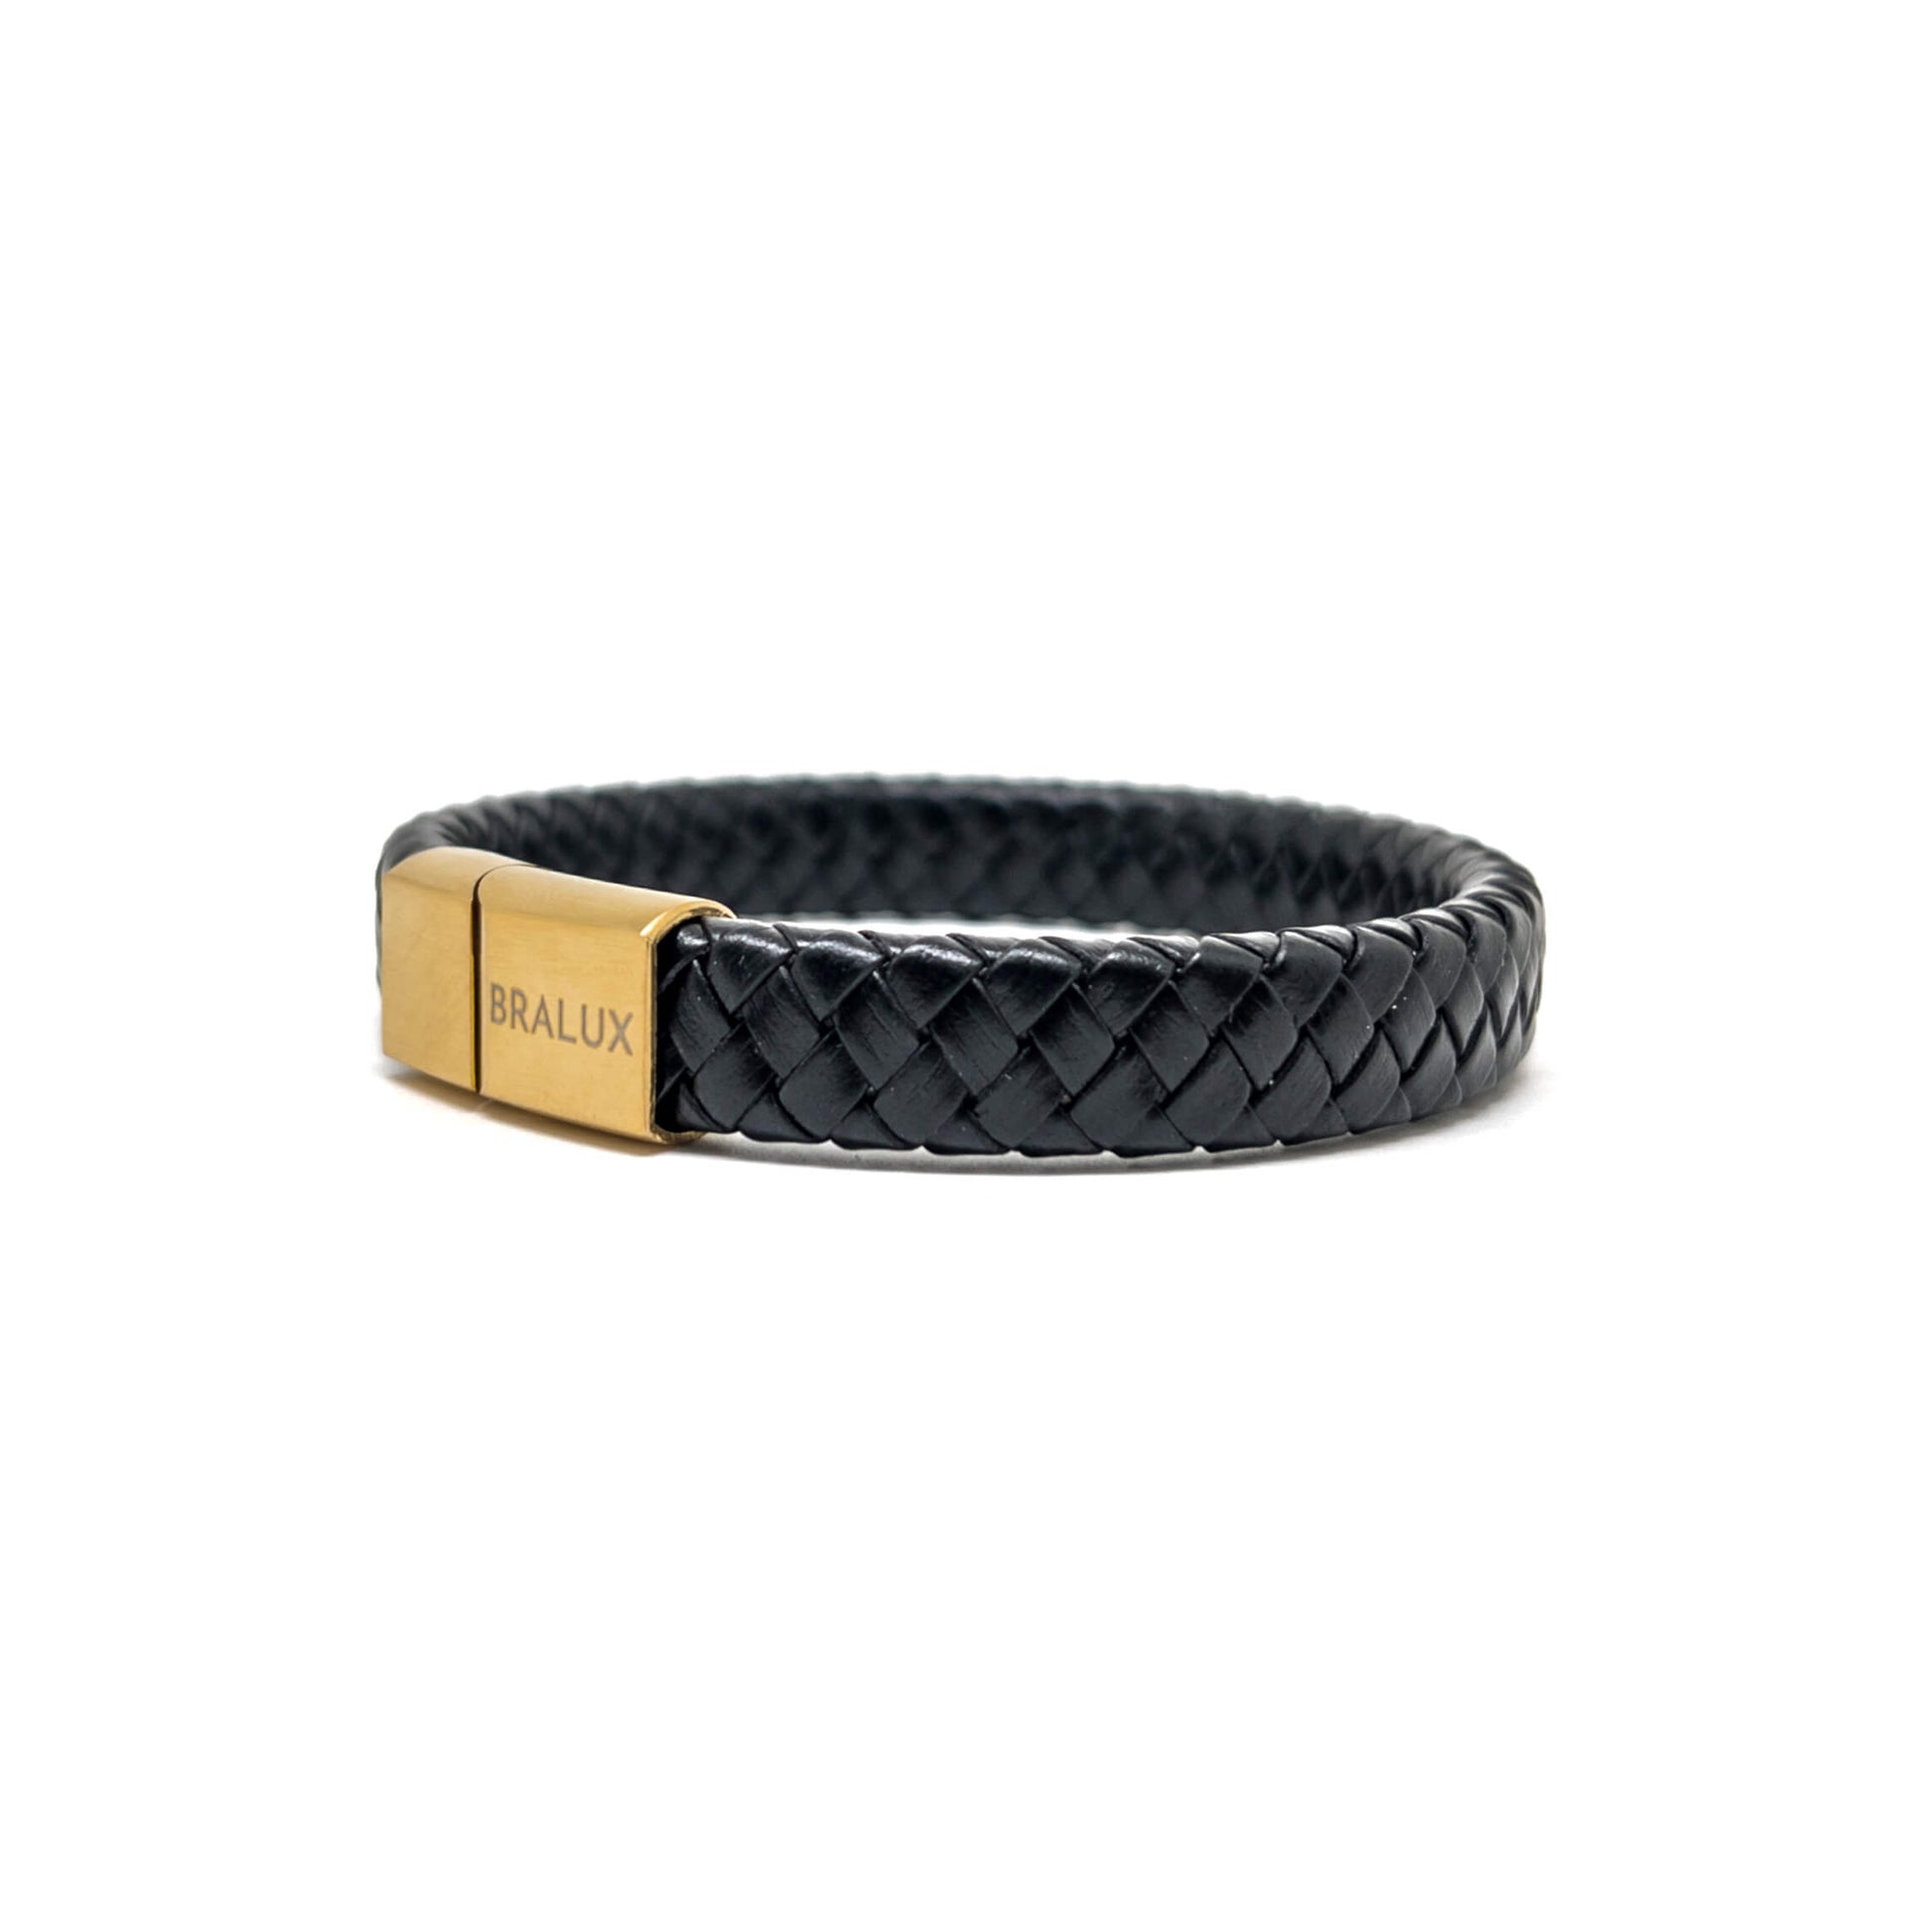 The Black Leather Bracelet